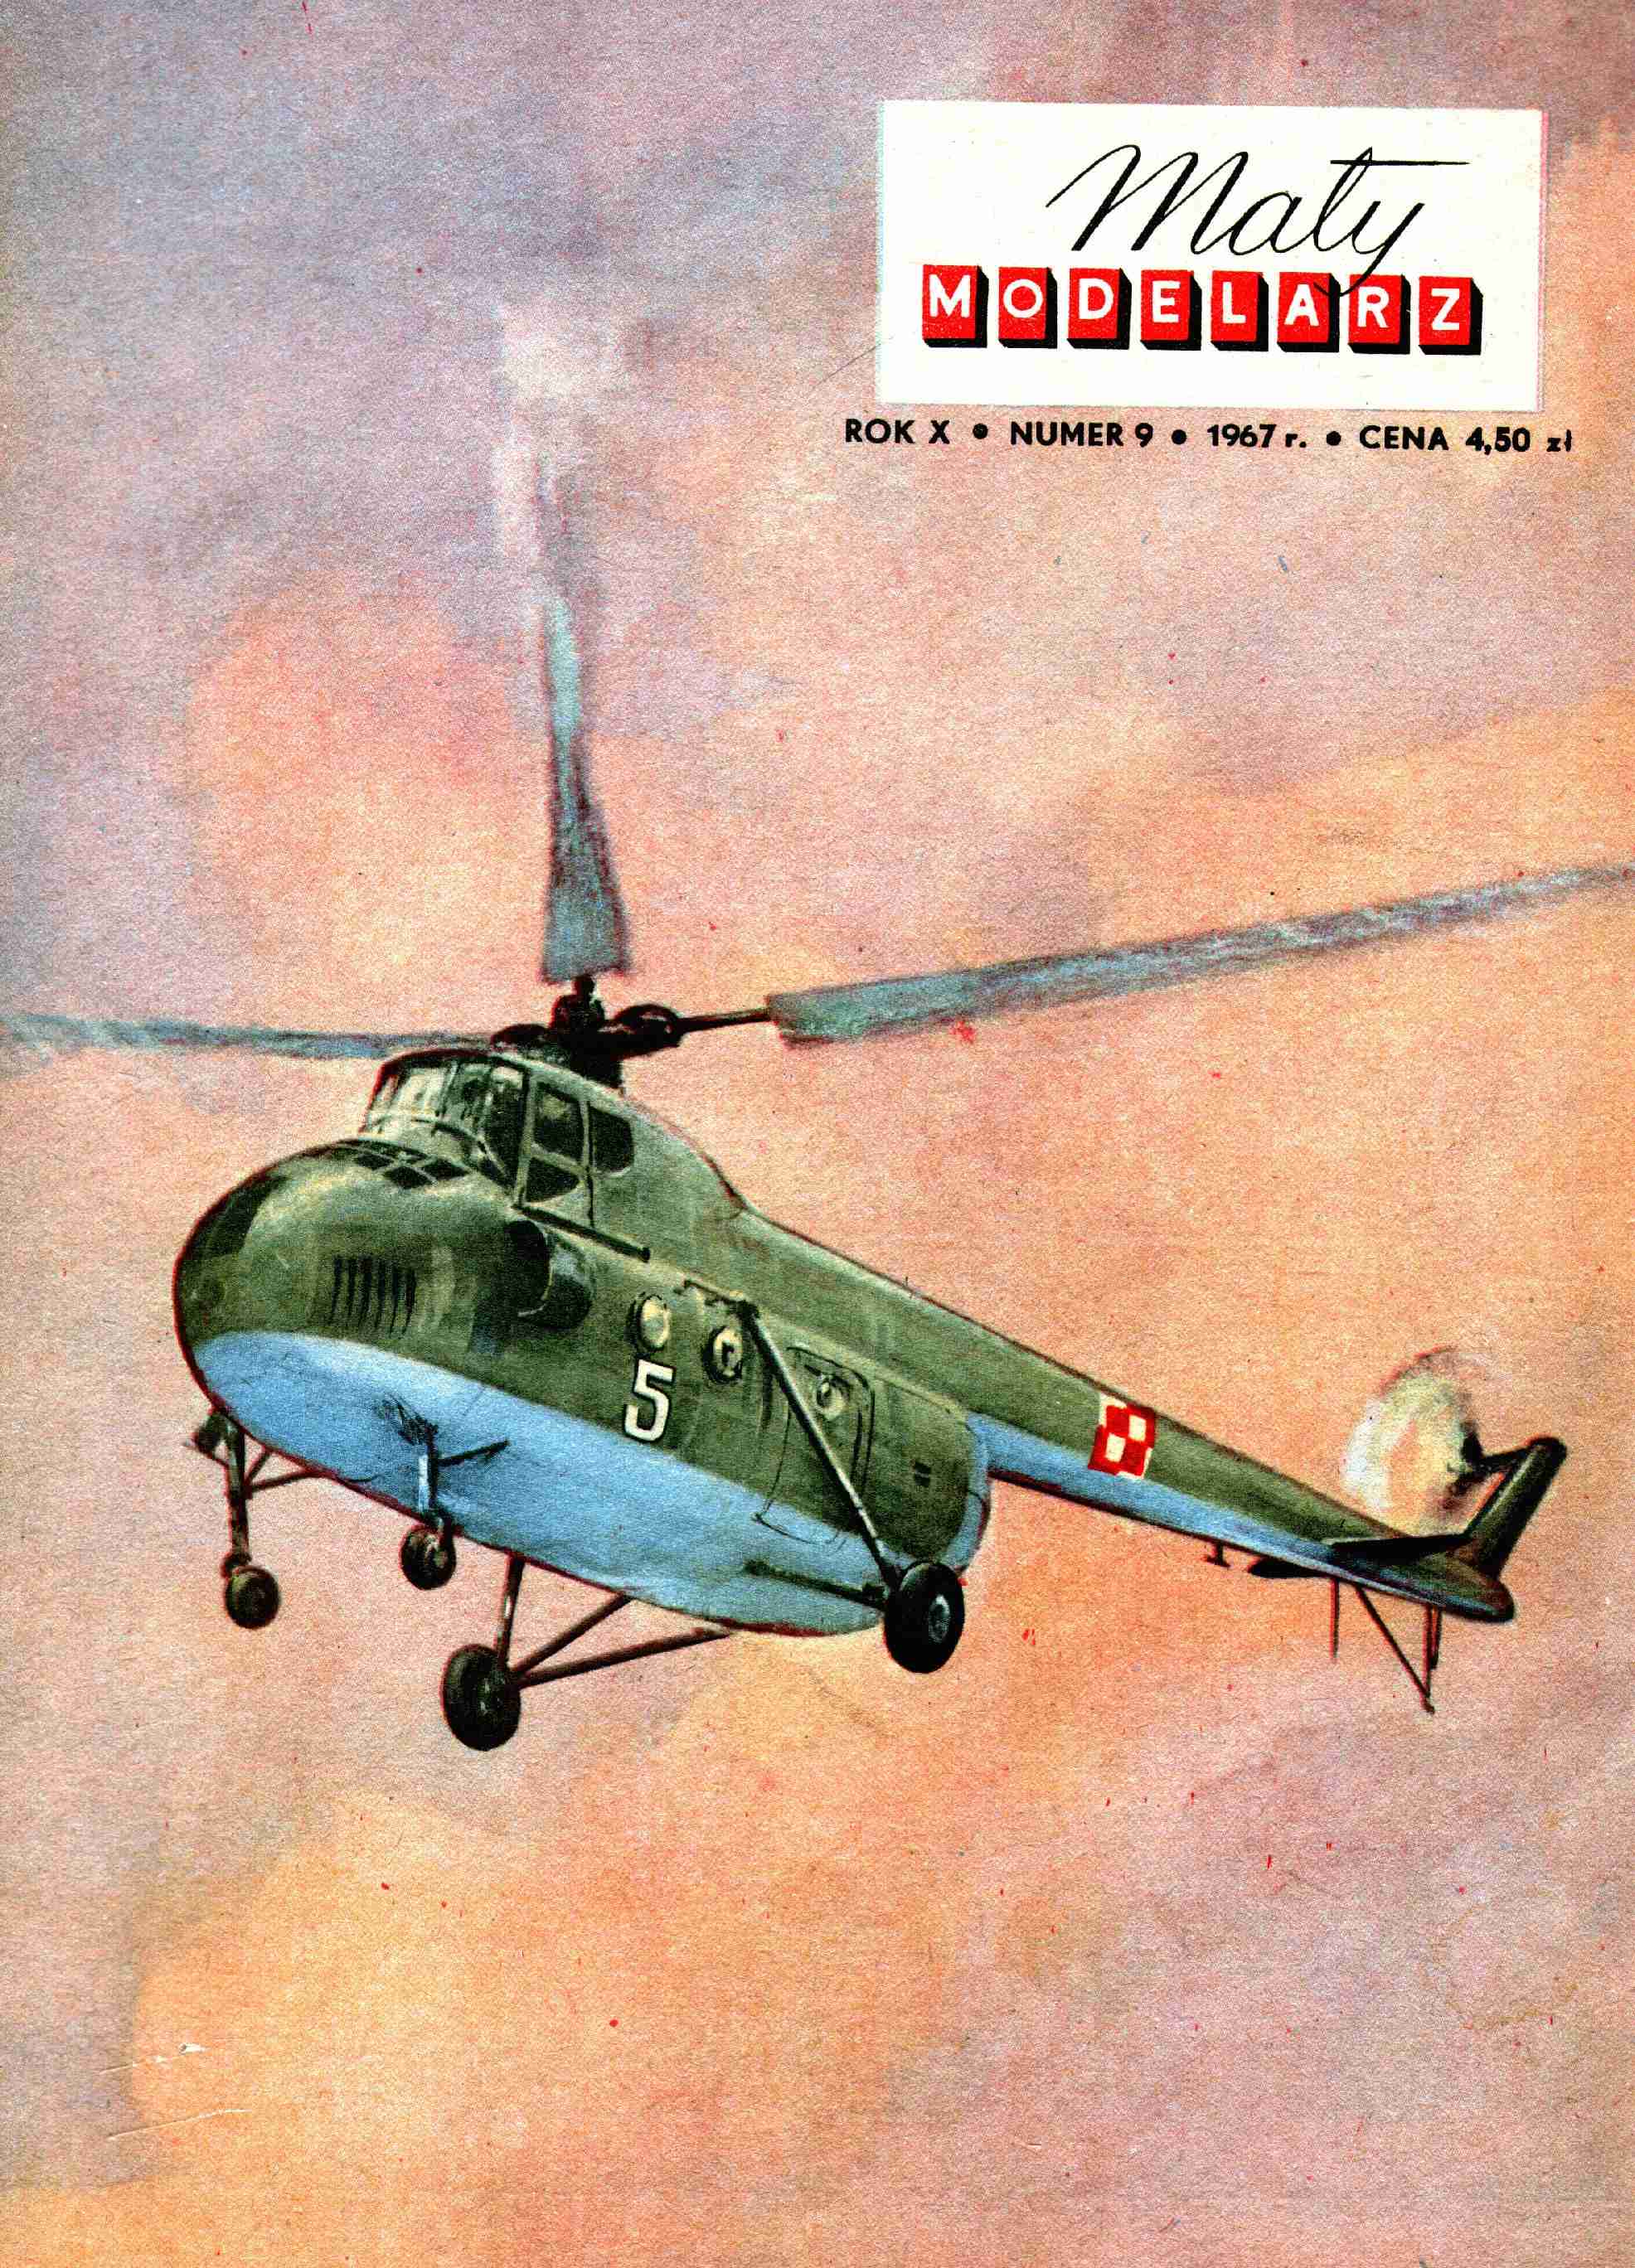 "Maly Modelarz" 9, 1967